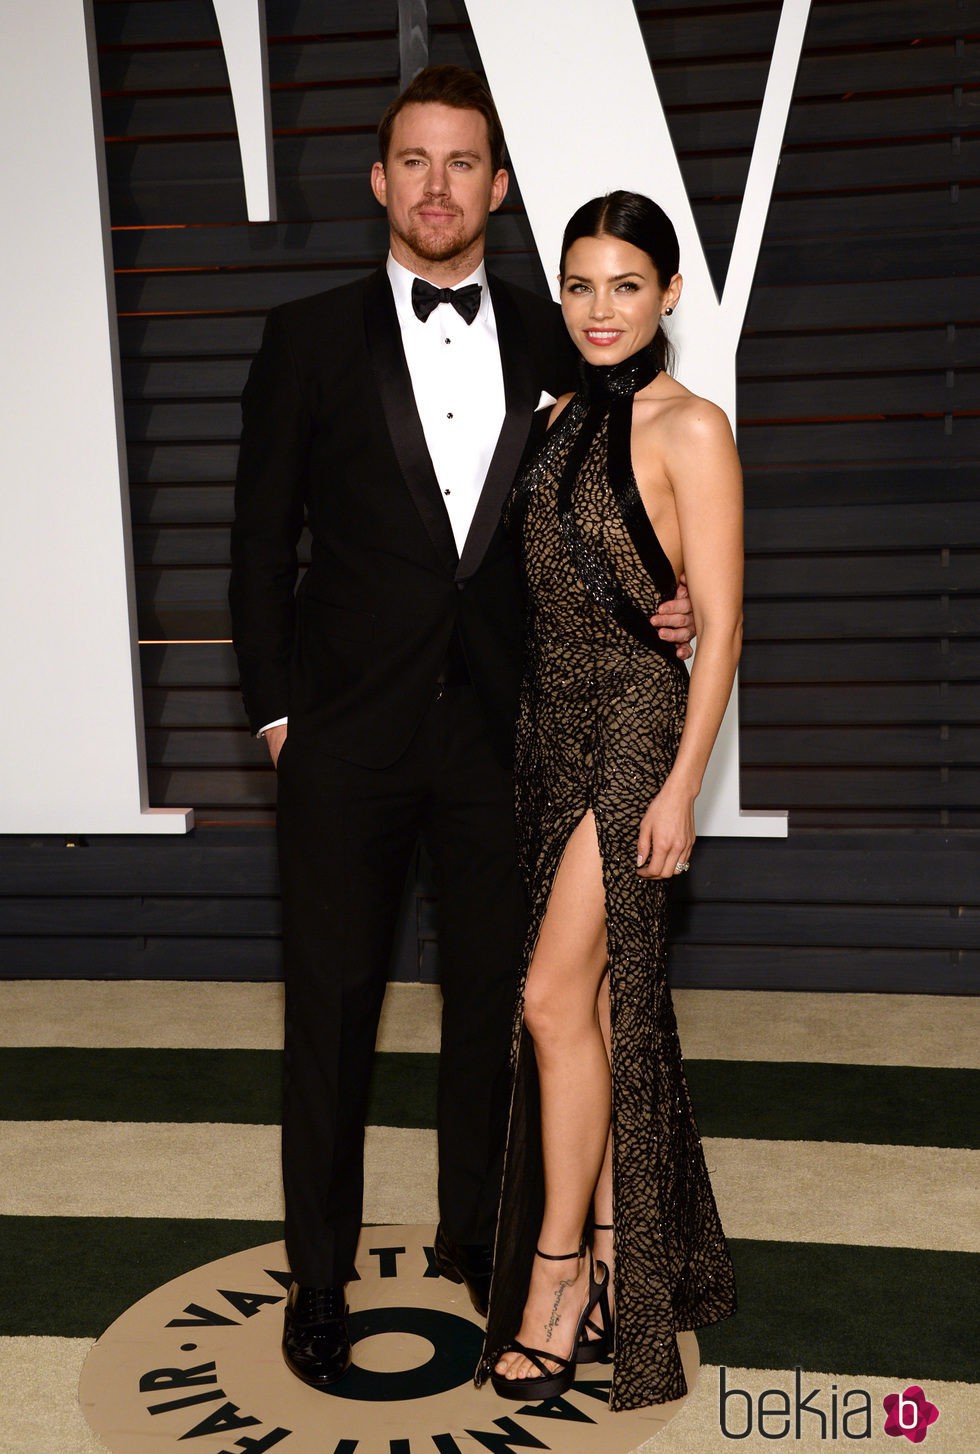 Channing Tatum y Jenna Dewan en la fiesta Vanity Fair tras los Oscar 2015